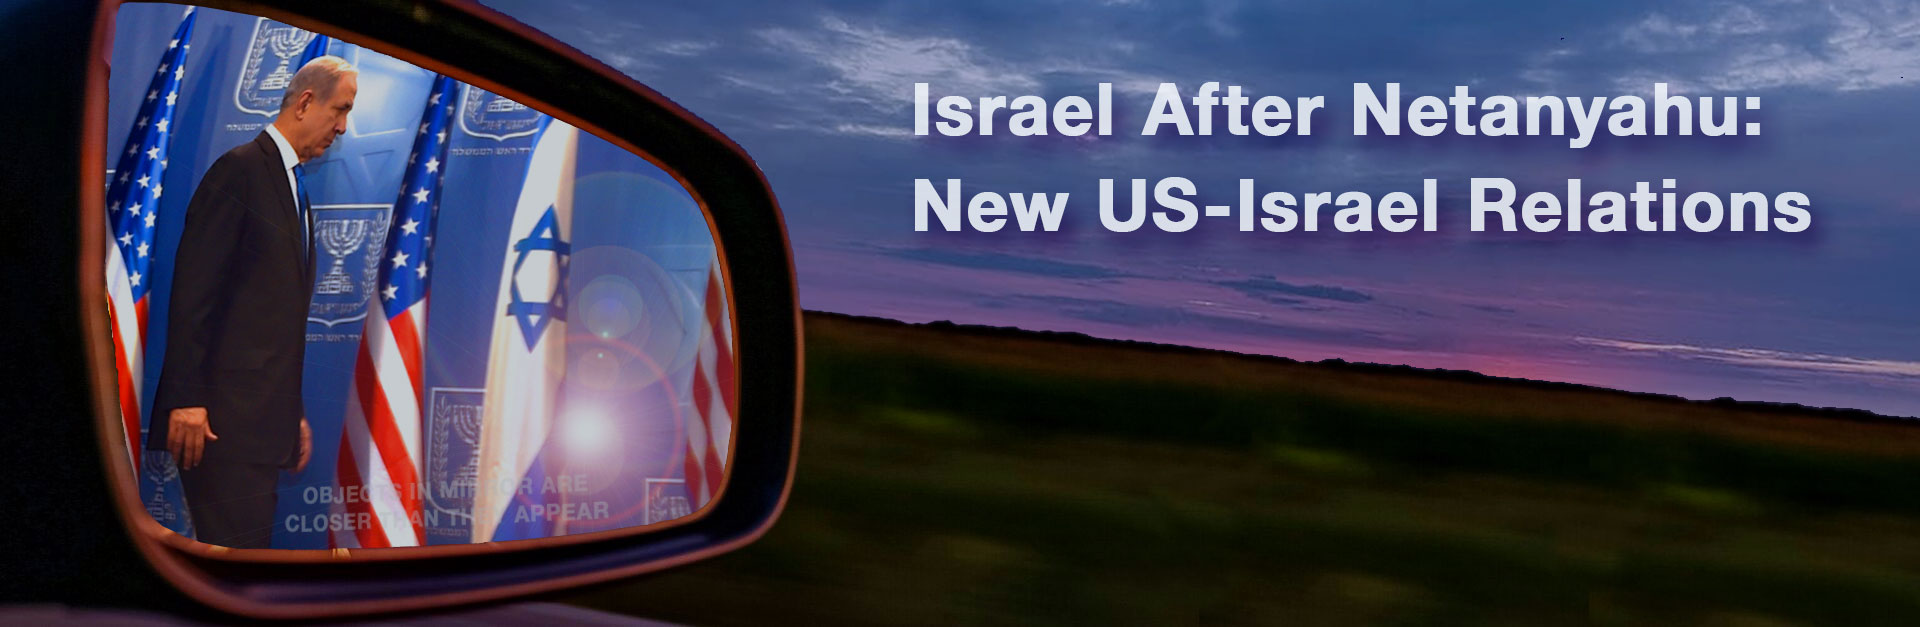 Israel After Netanyahu: New US-Israel Relations